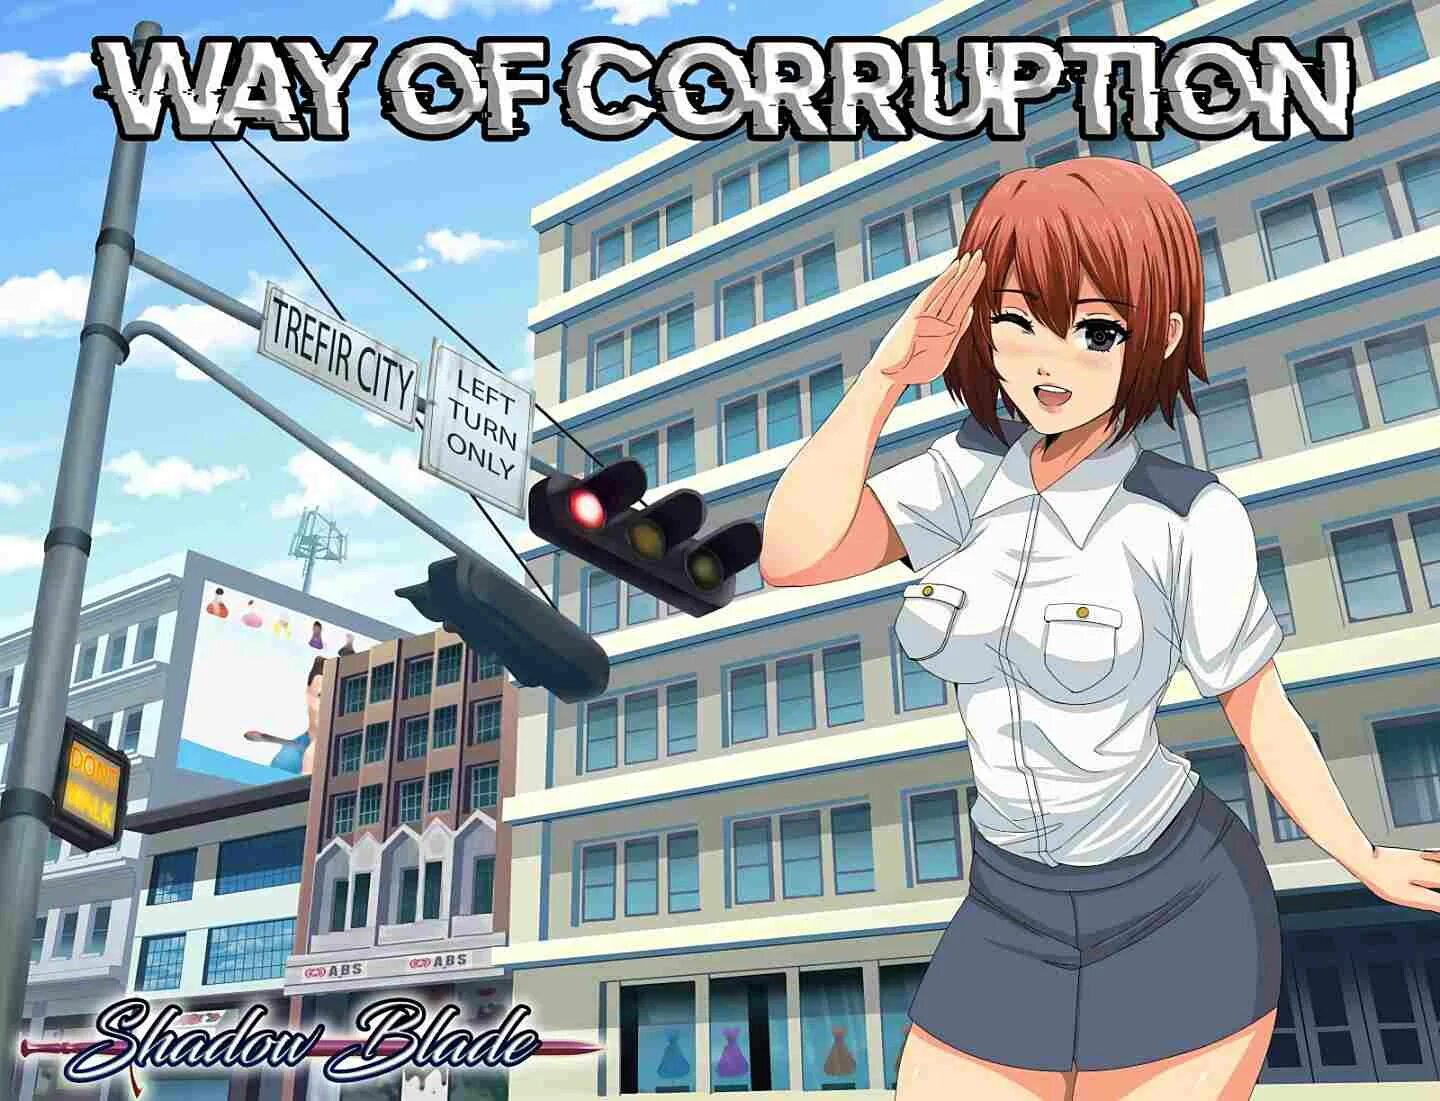 Corruption obscene. Way of corruption. Corruption игра. Agency of corruption игра. H-game коррупция.